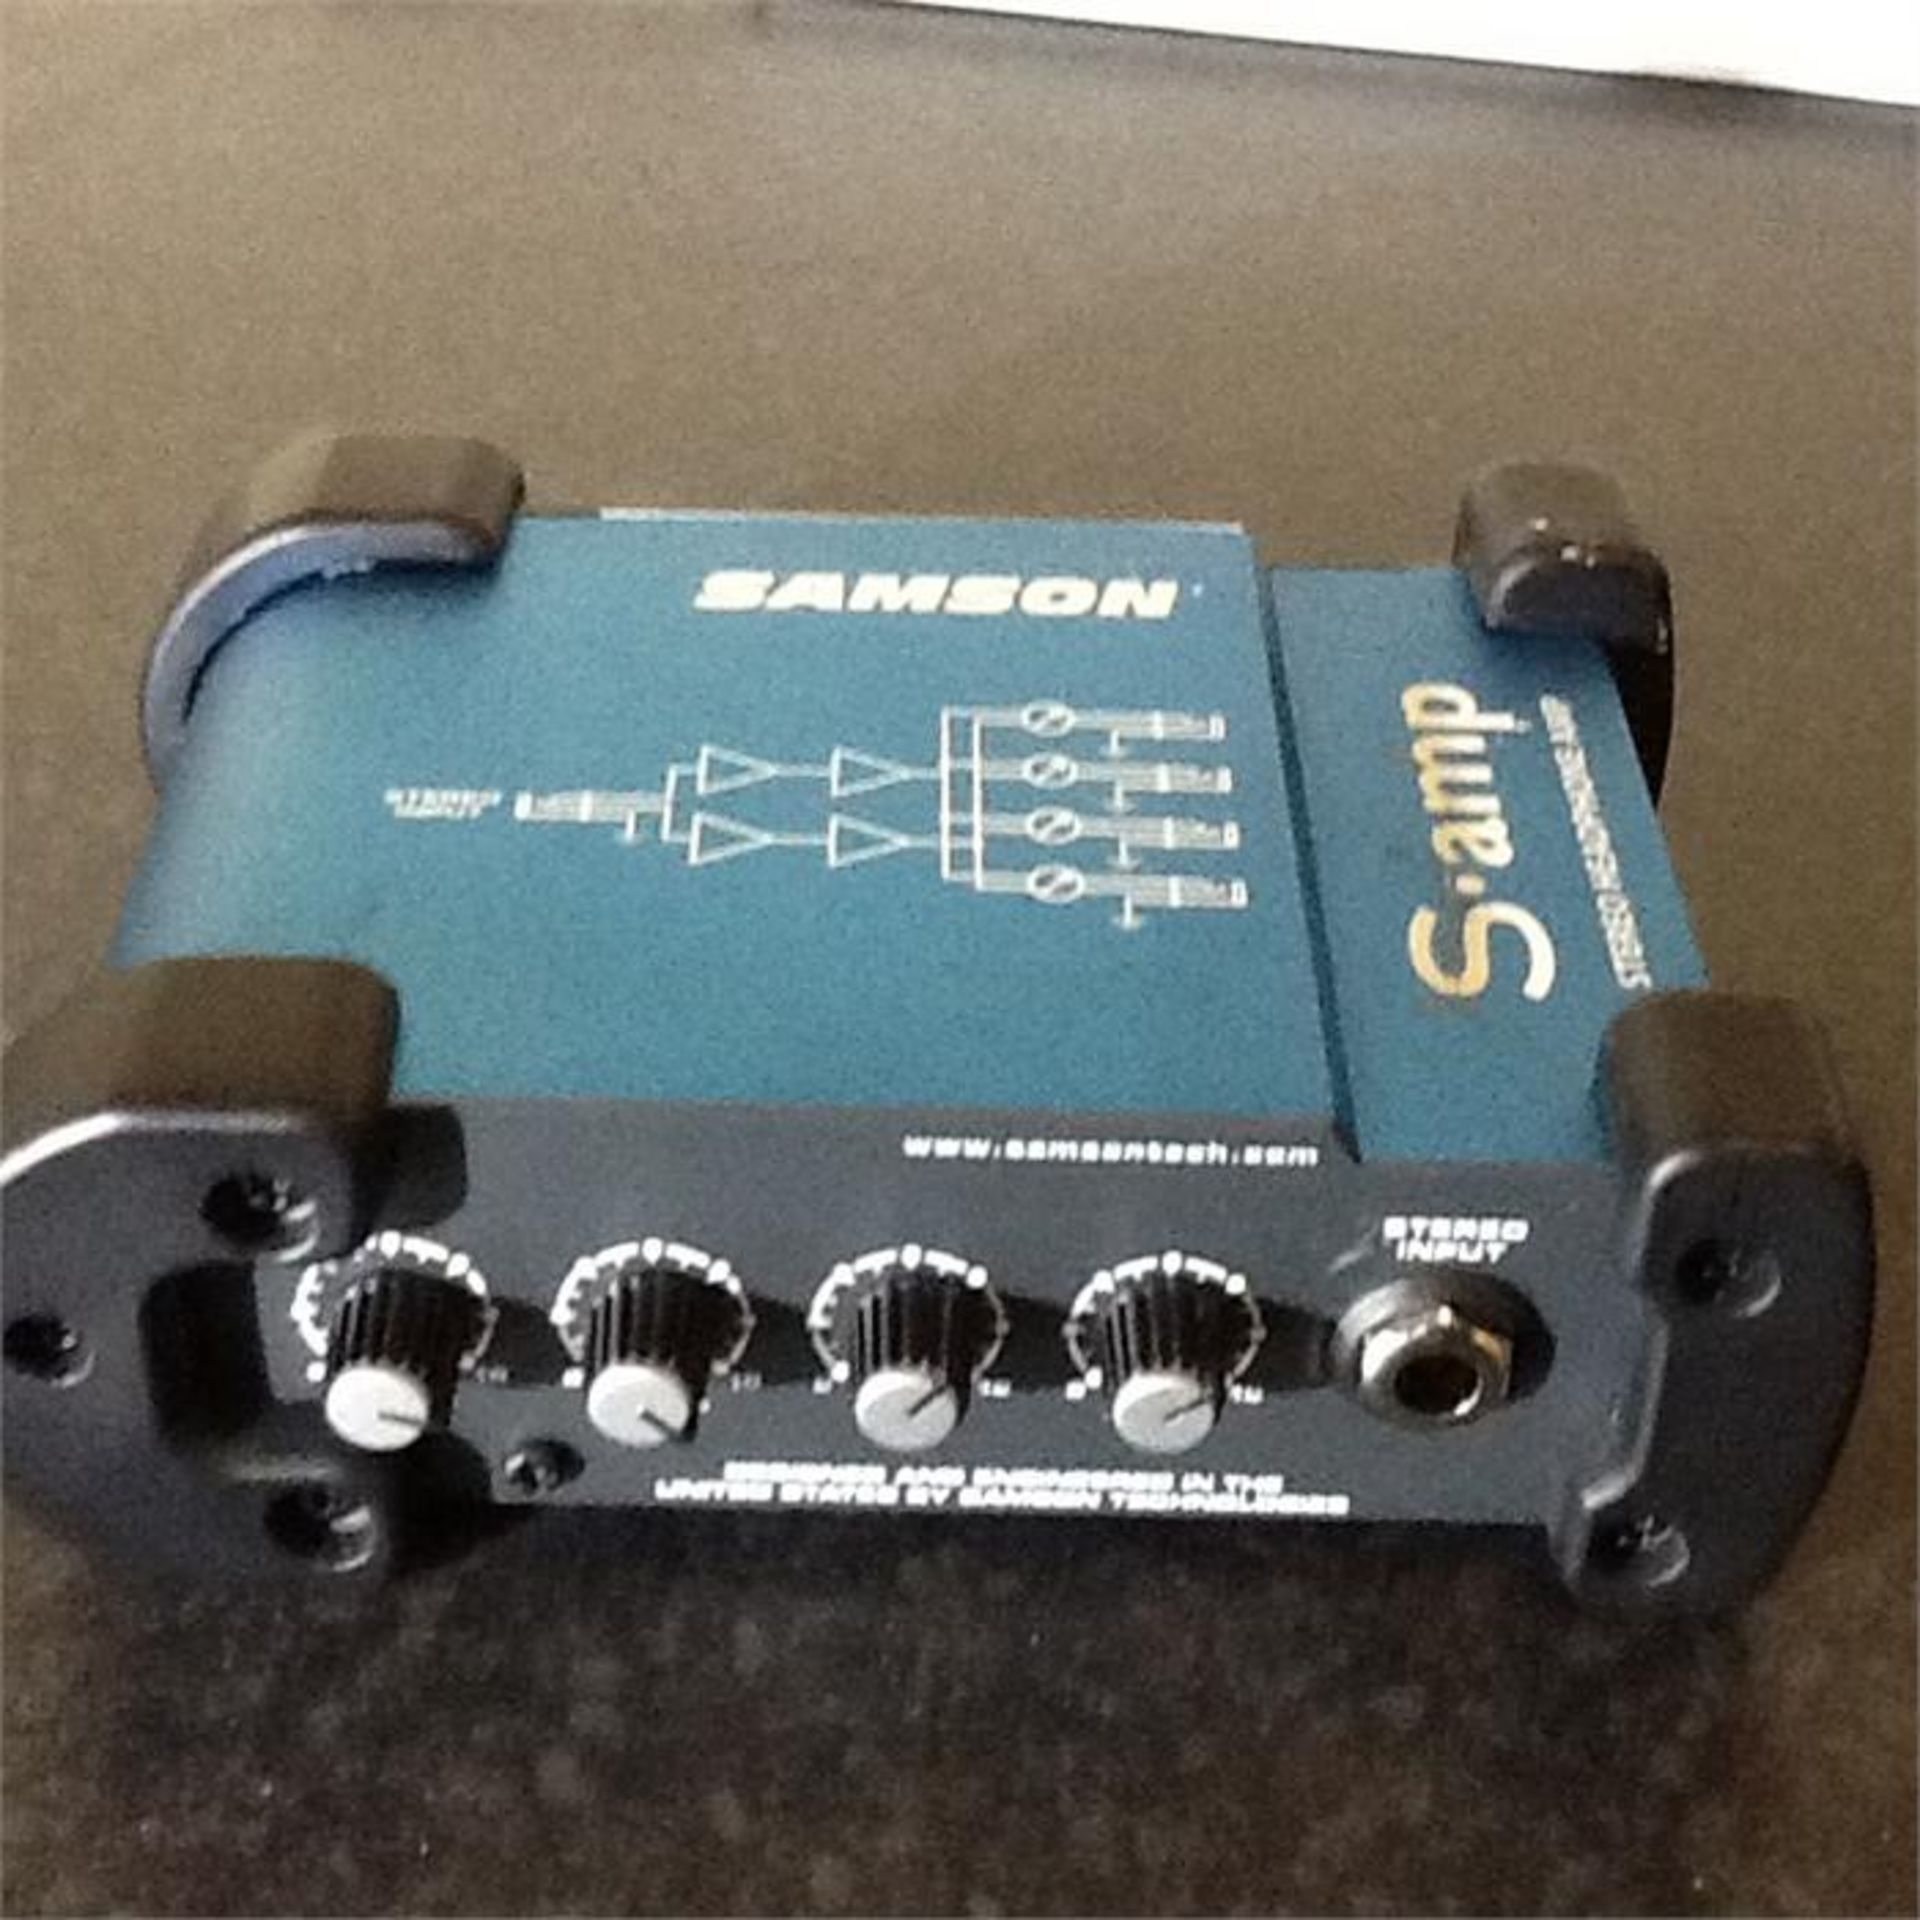 Samson s amp. Headphone amp. No lead - Image 5 of 5